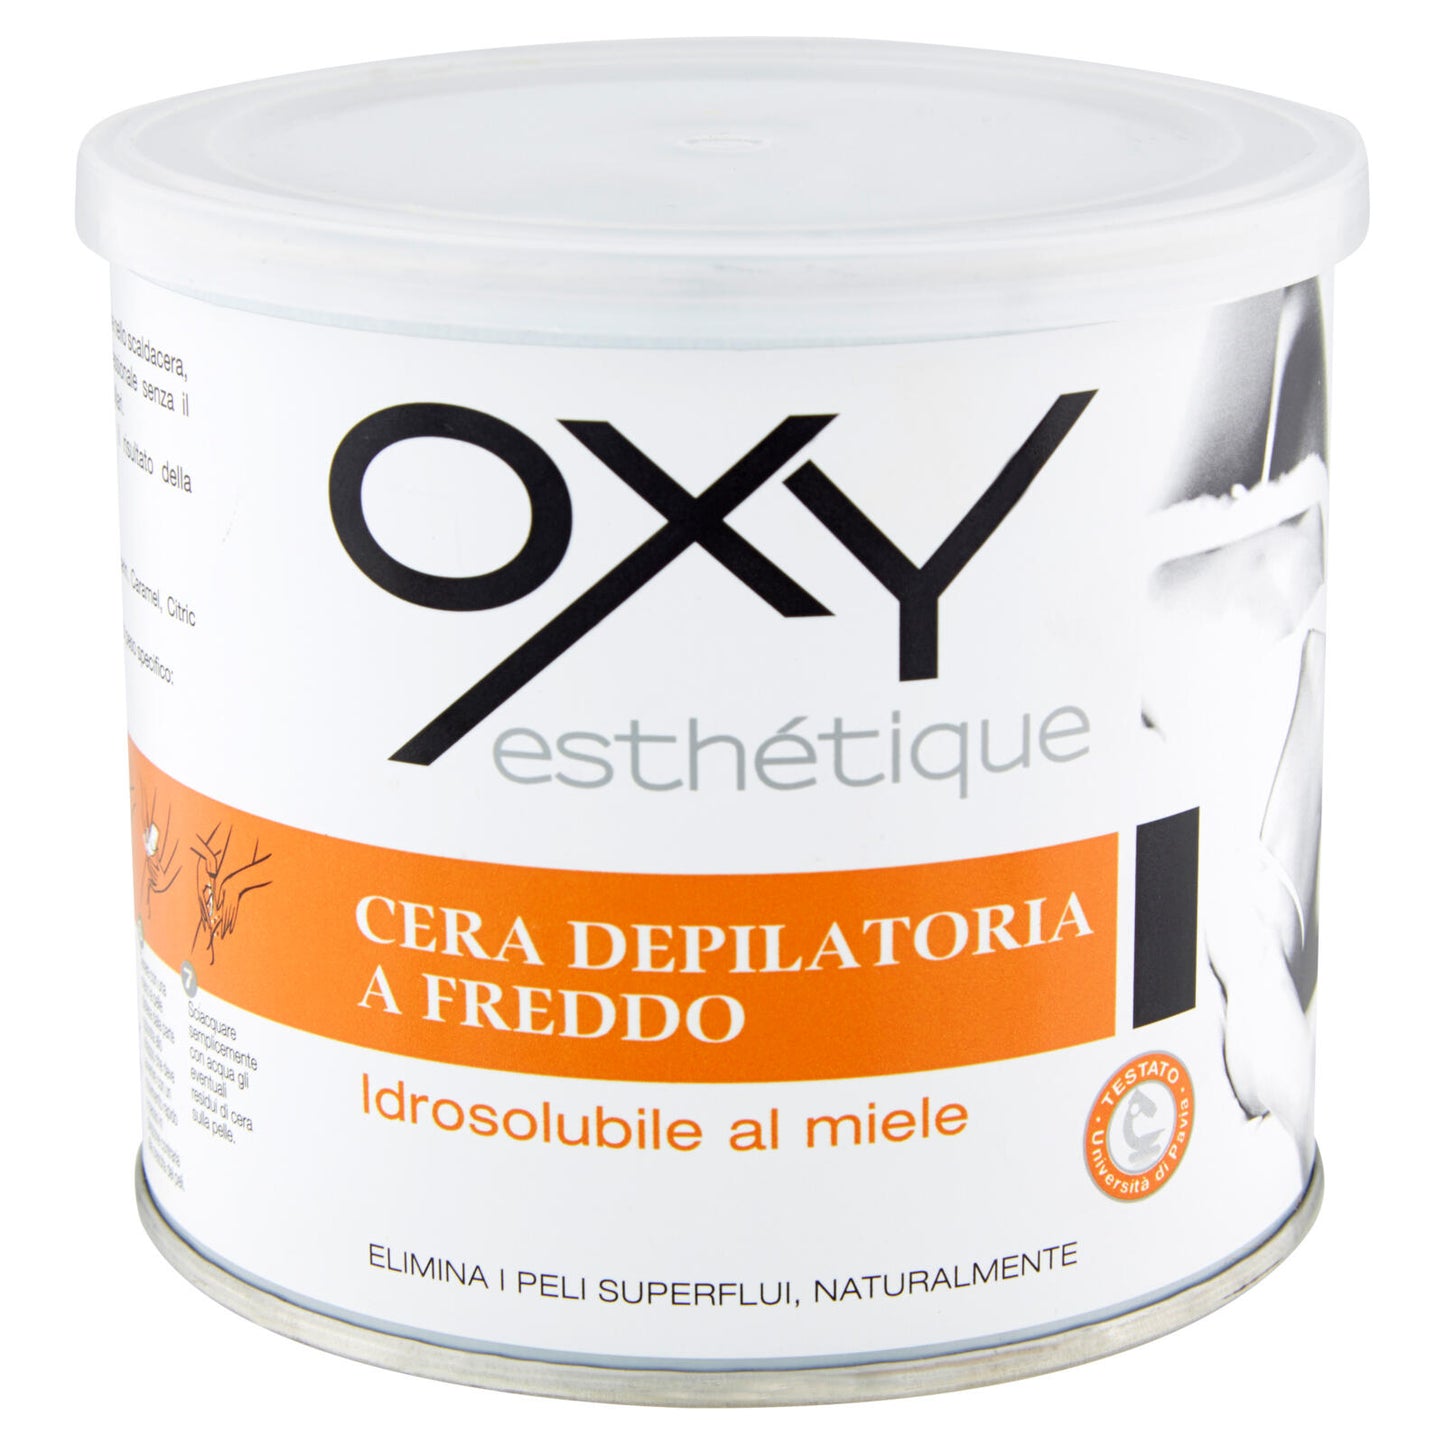 Oxy Esthétique Cera depilatoria a freddo idrosolubile al miele 350 ml